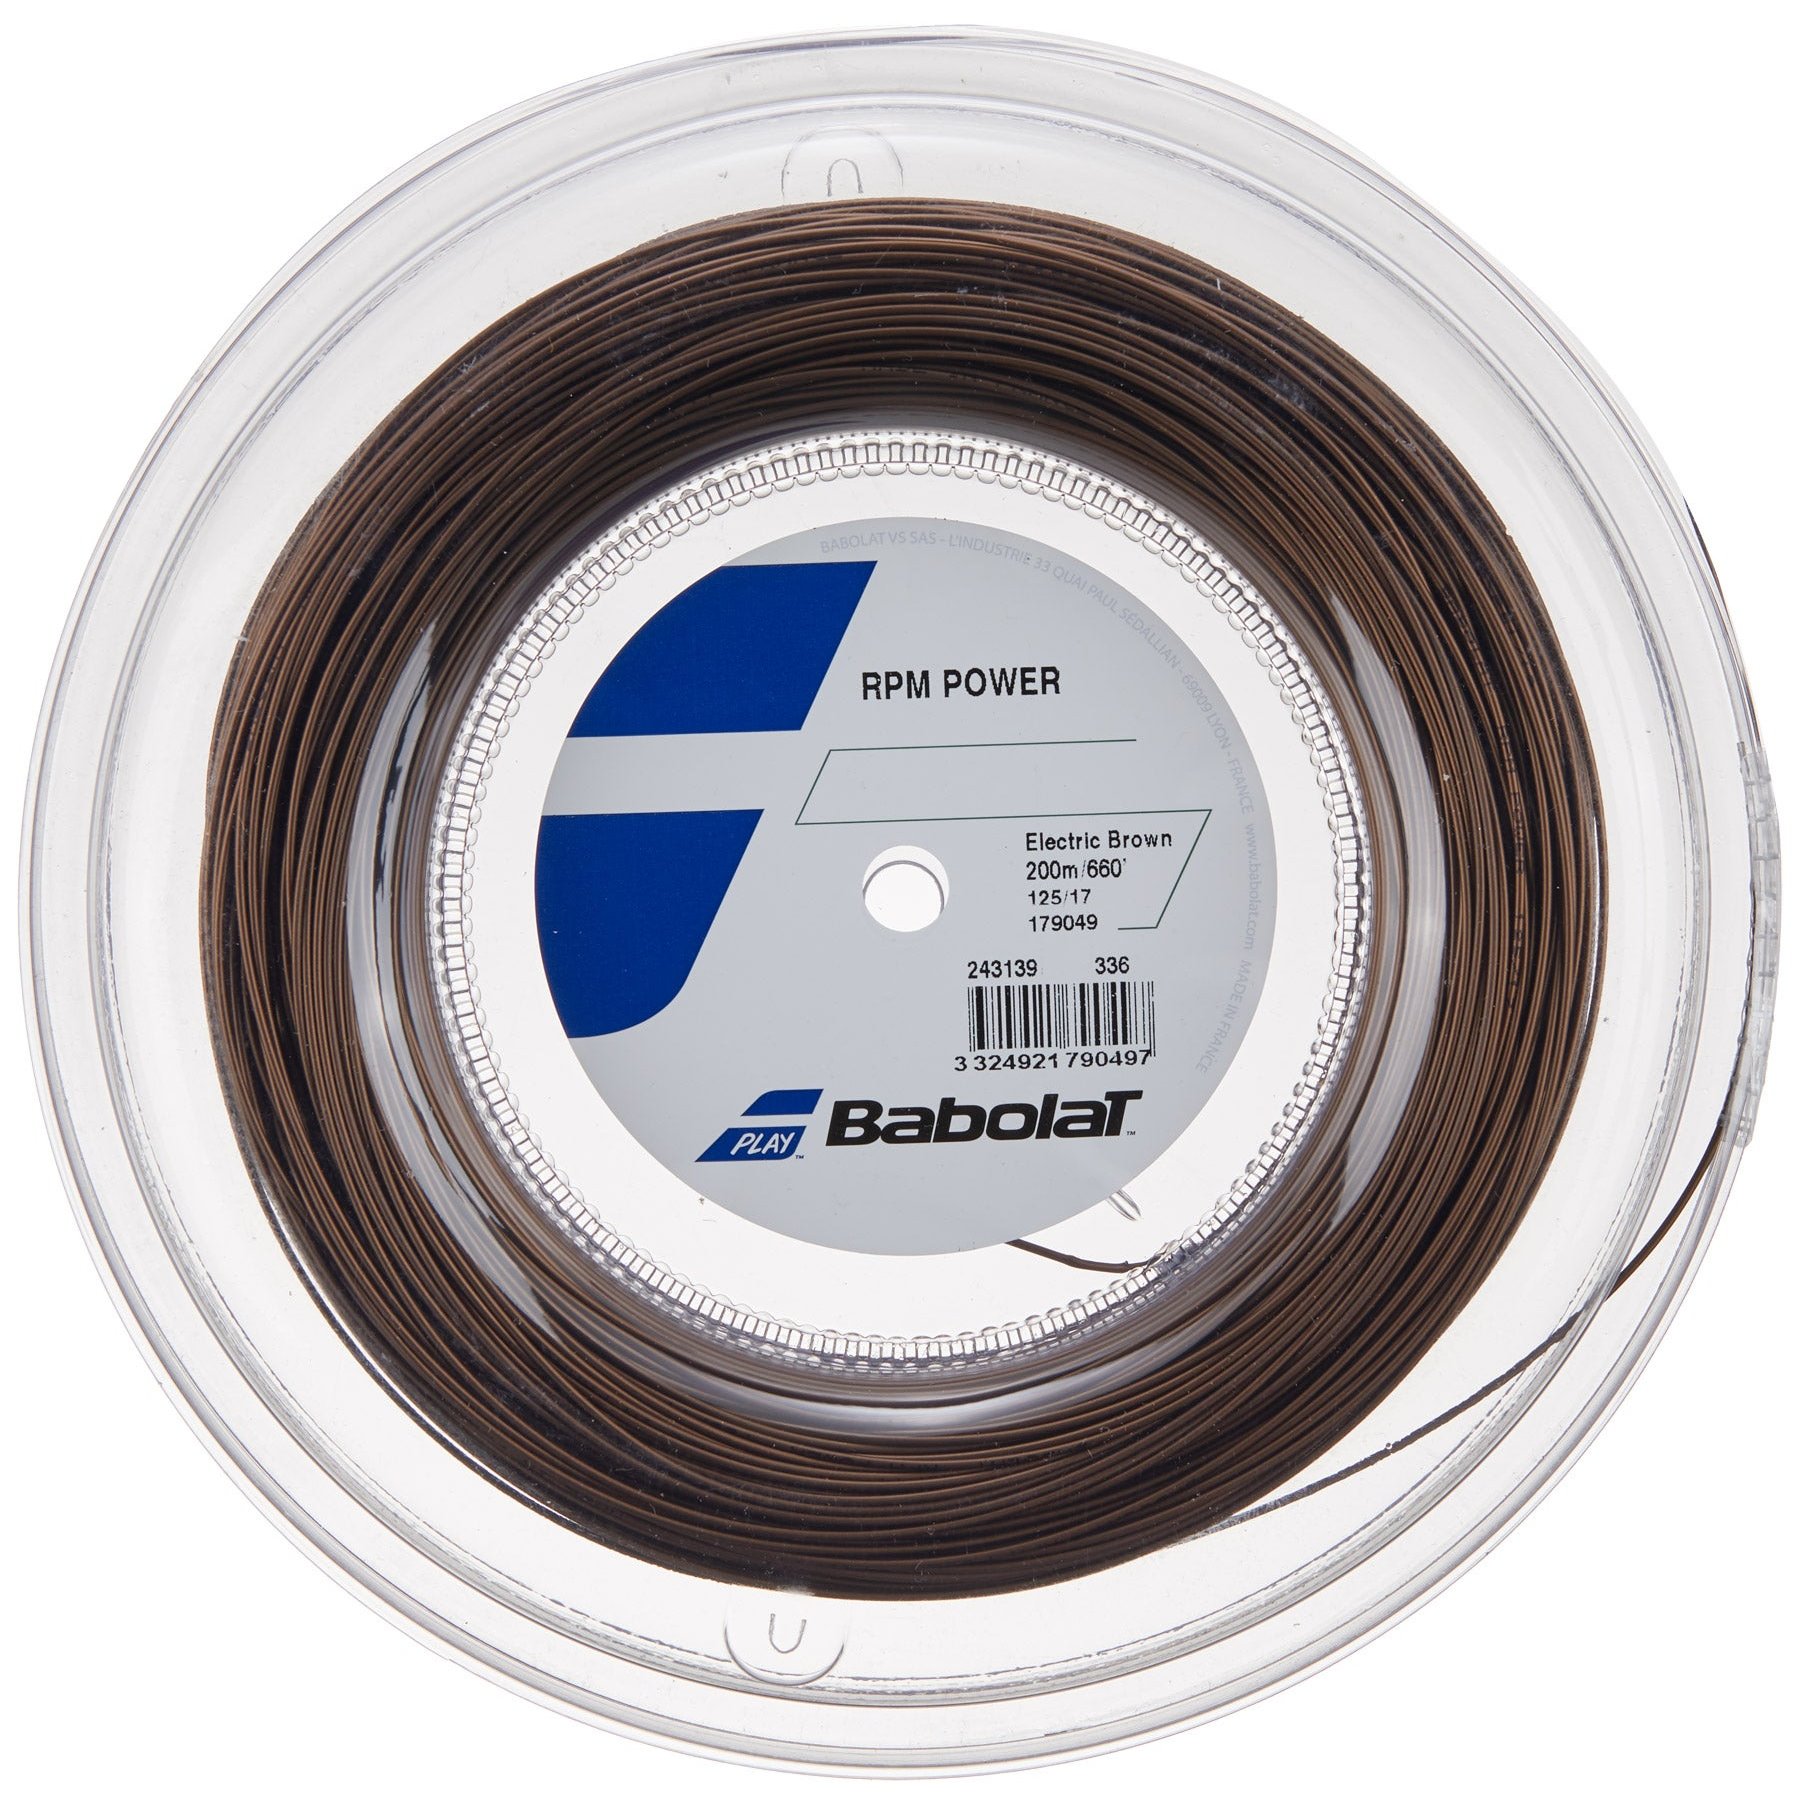 Babolat RPM Power 17/1.25 Tennis String Reel 200m/660ft